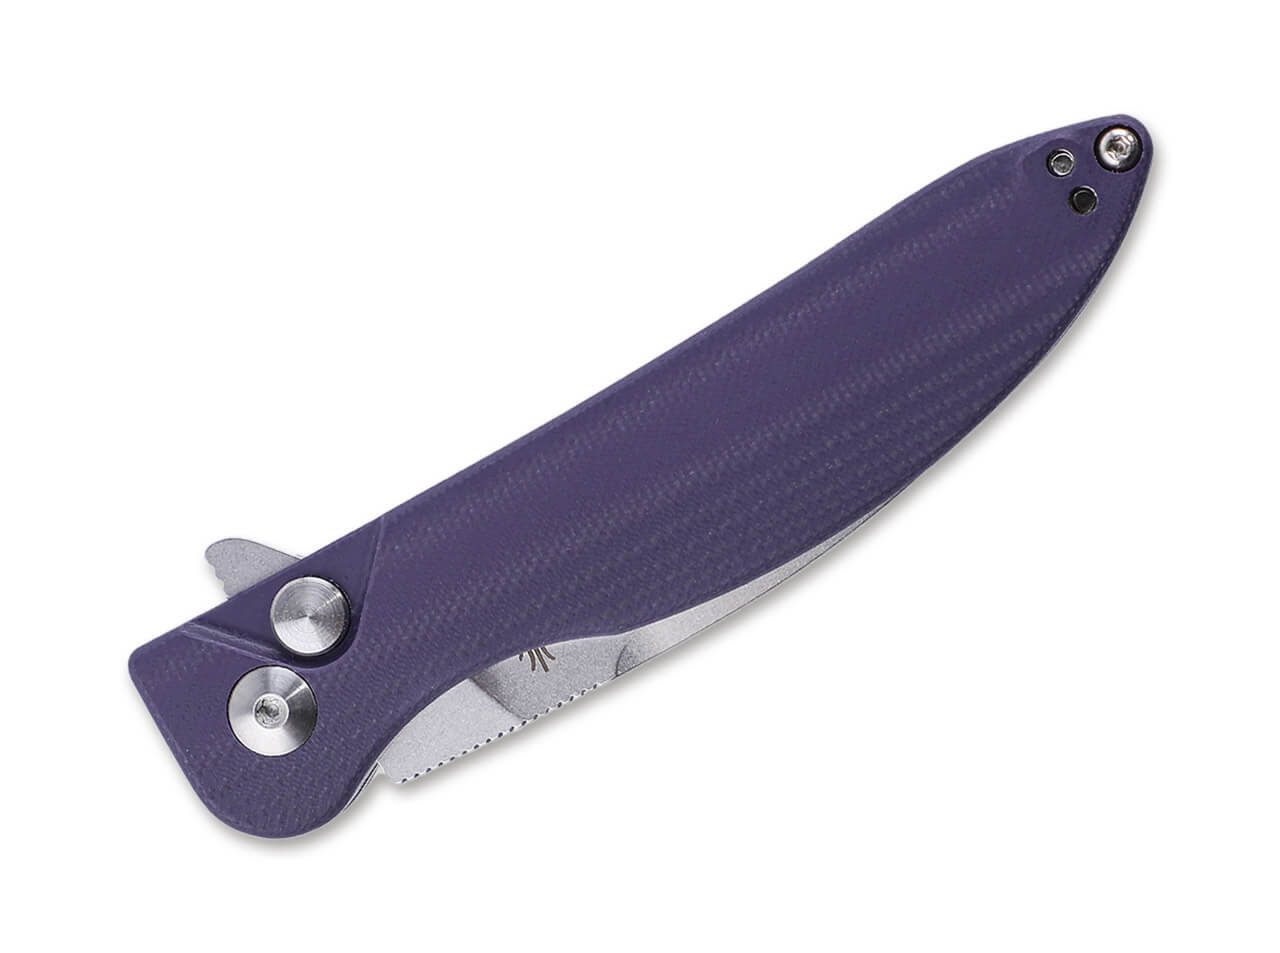 Swayback Purple G-10 Handle Large EDC Outdoor Knife - Kizer